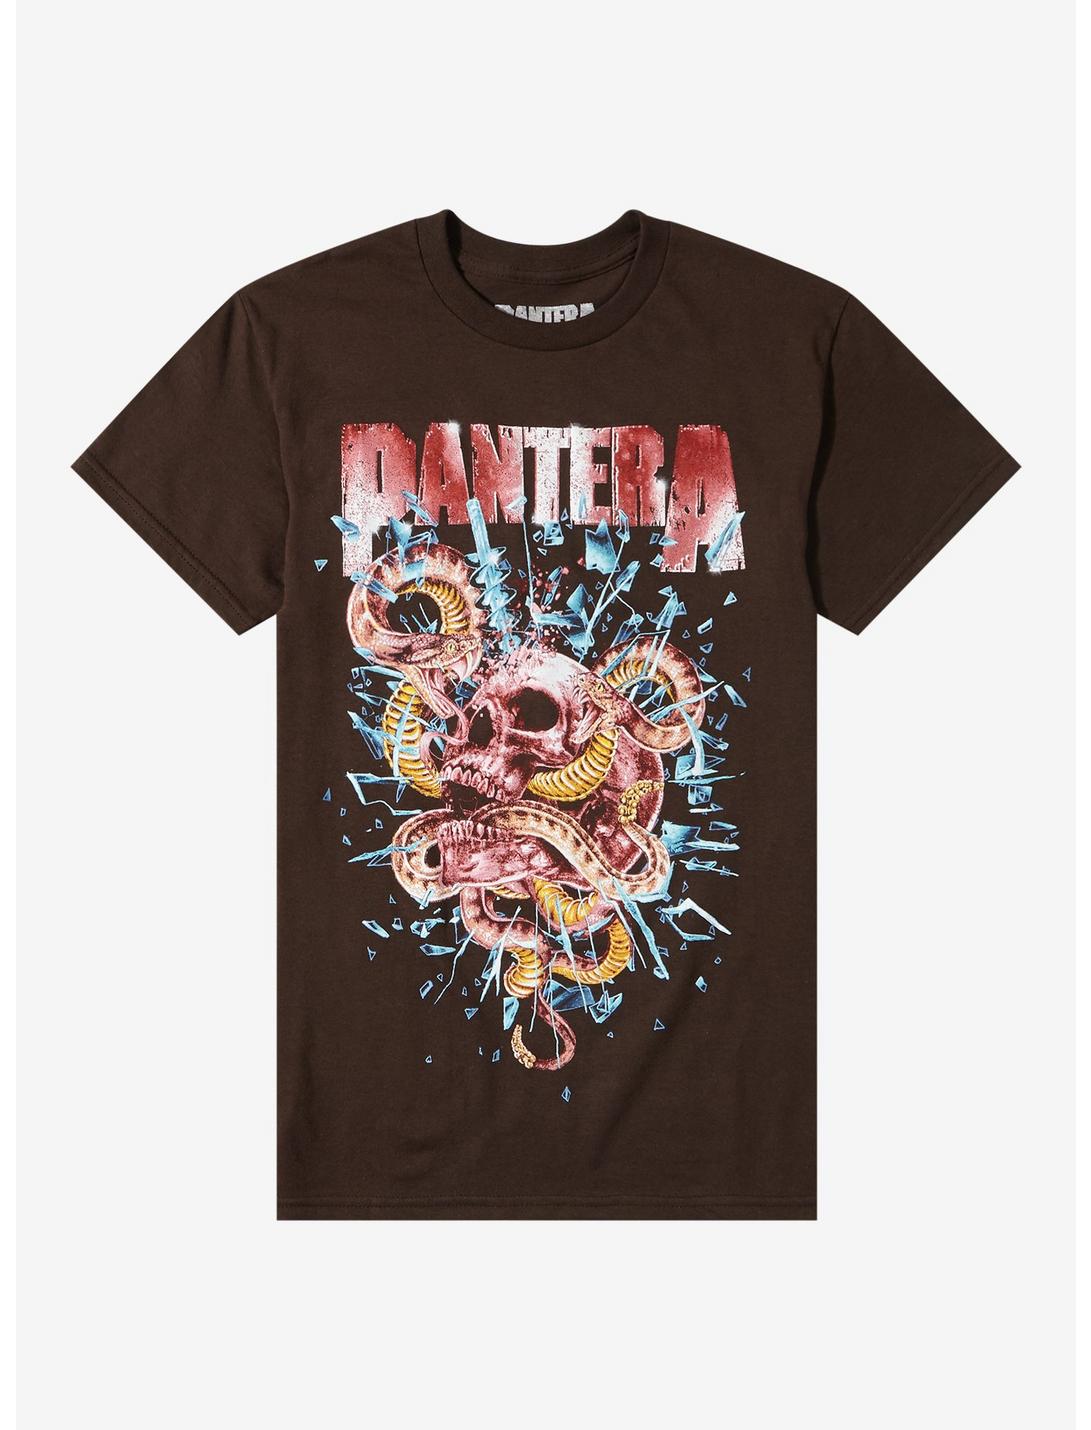 Pantera Drill Bit Skull & Snake Boyfriend Fit Girls T-Shirt, DARK CHOCOLATE, hi-res